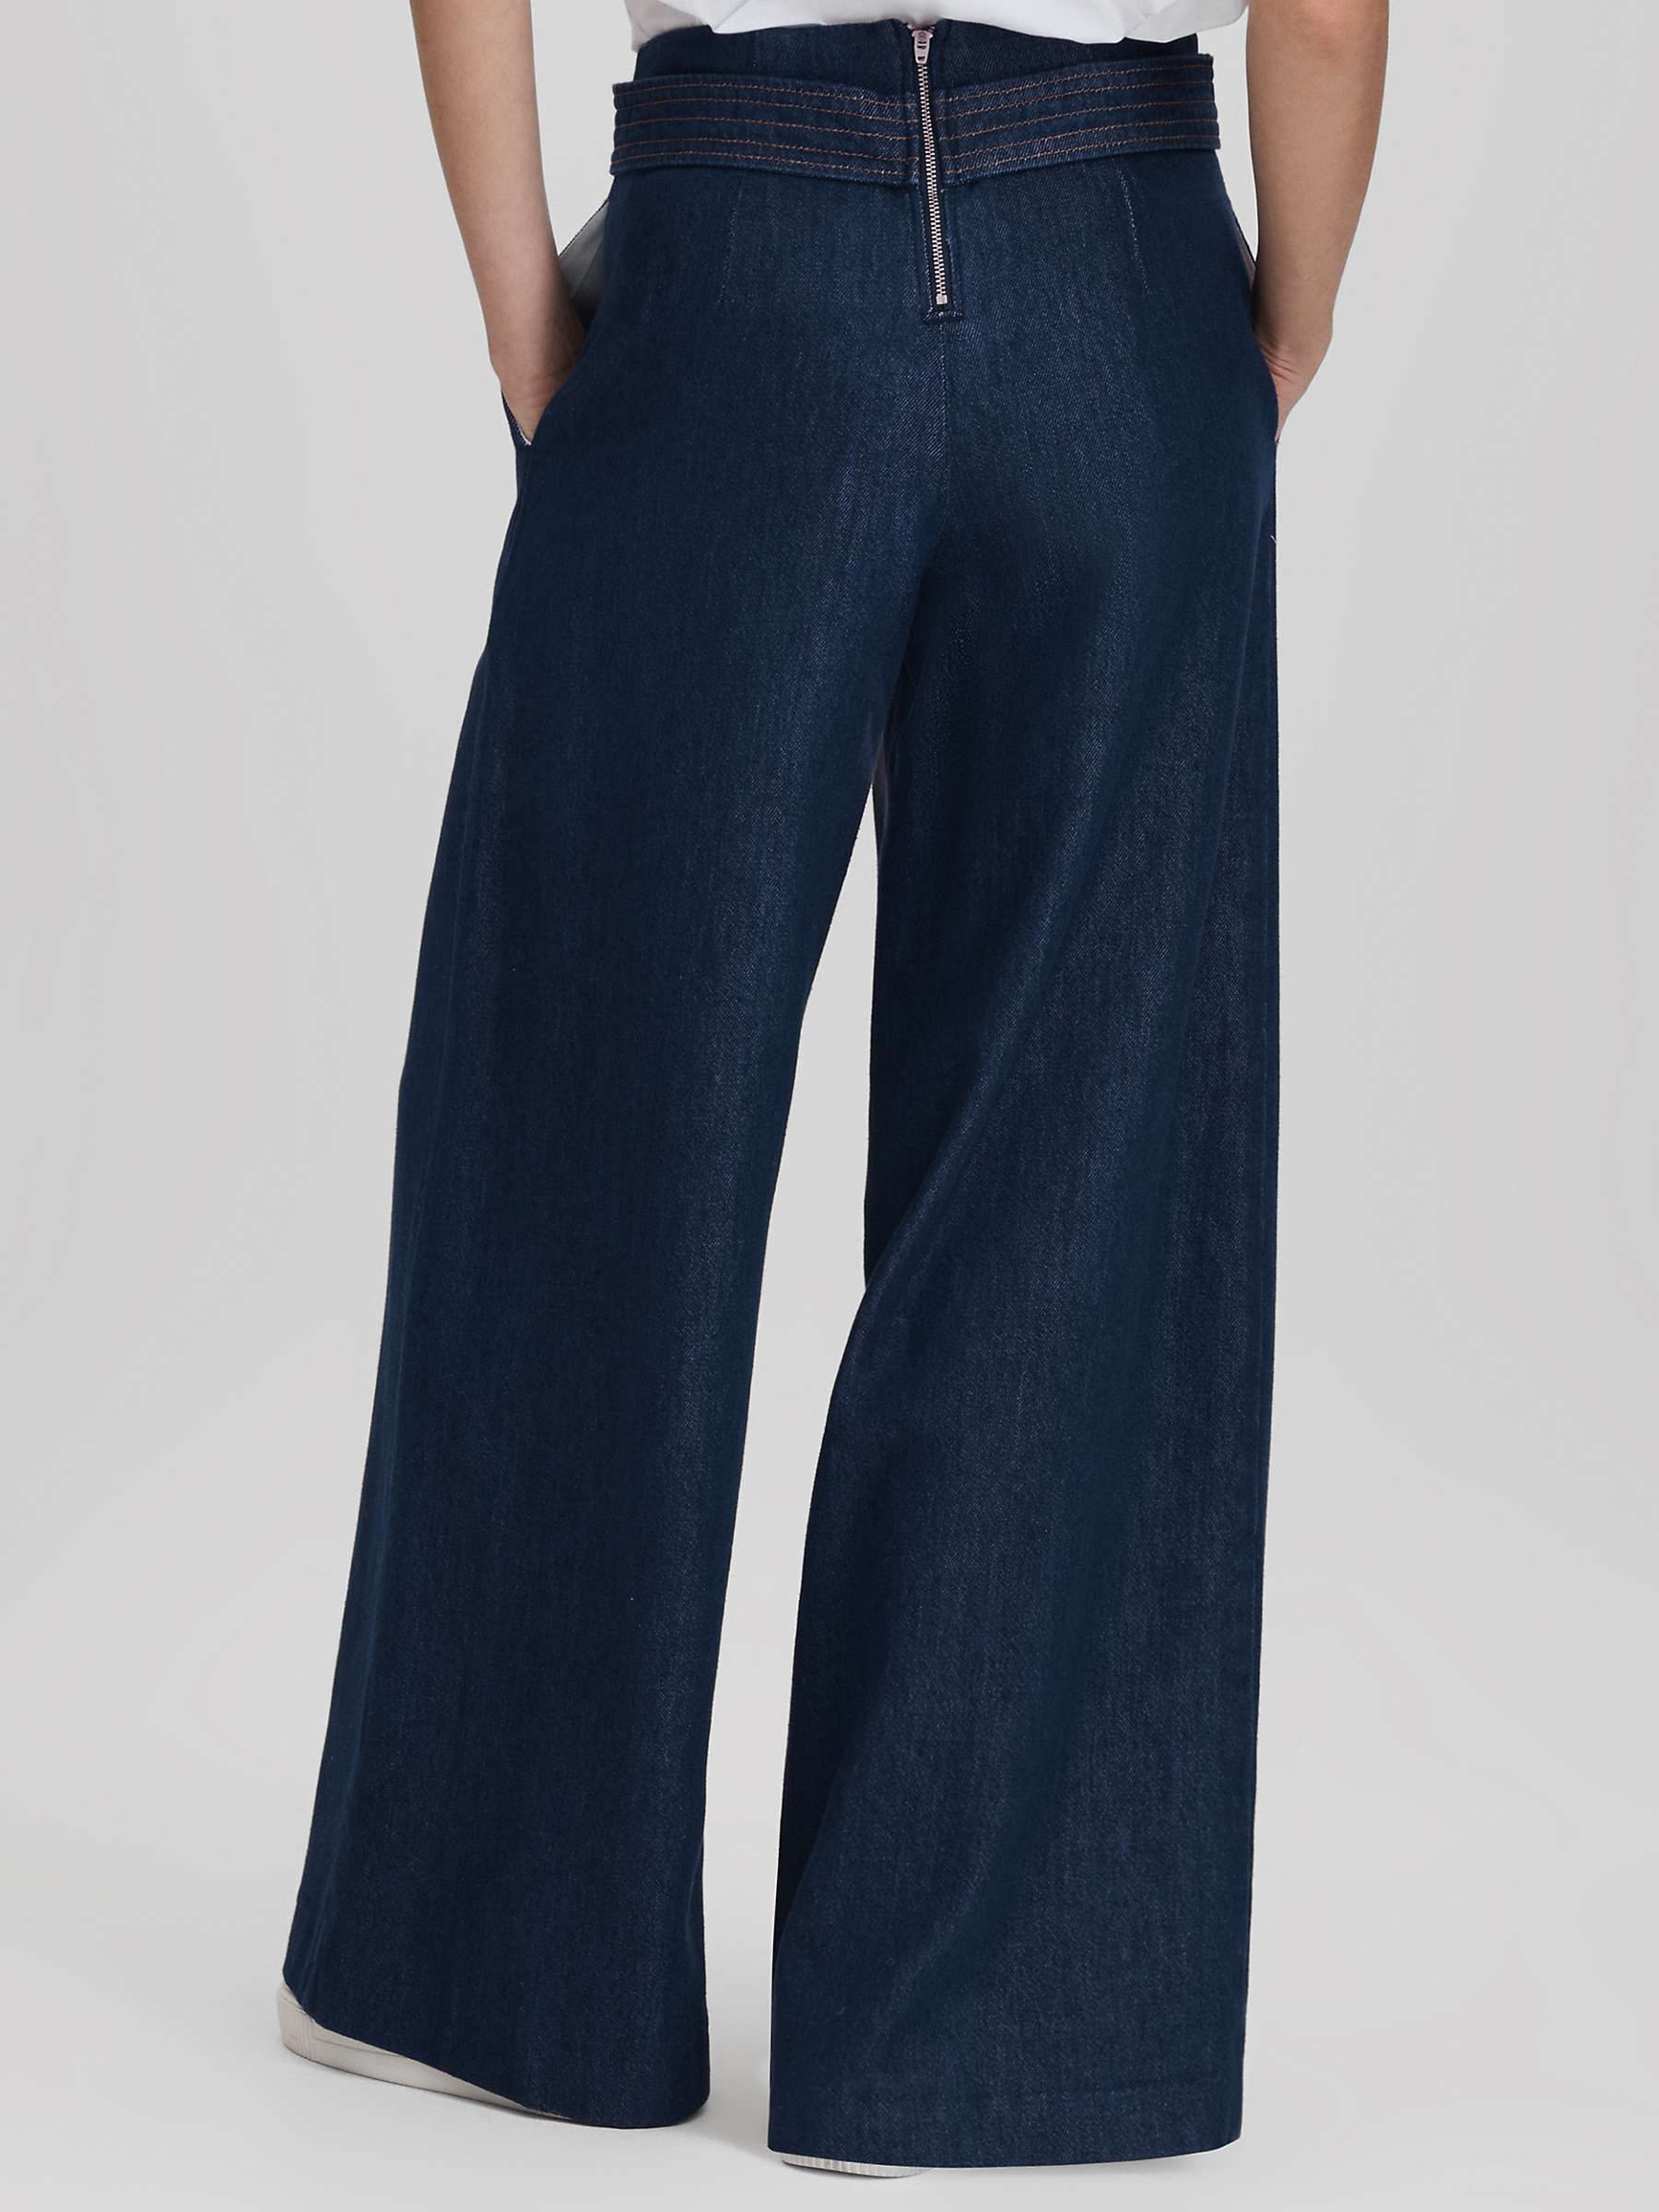 Buy Reiss Lianna Wide Leg Jeans, Dark Blue Online at johnlewis.com